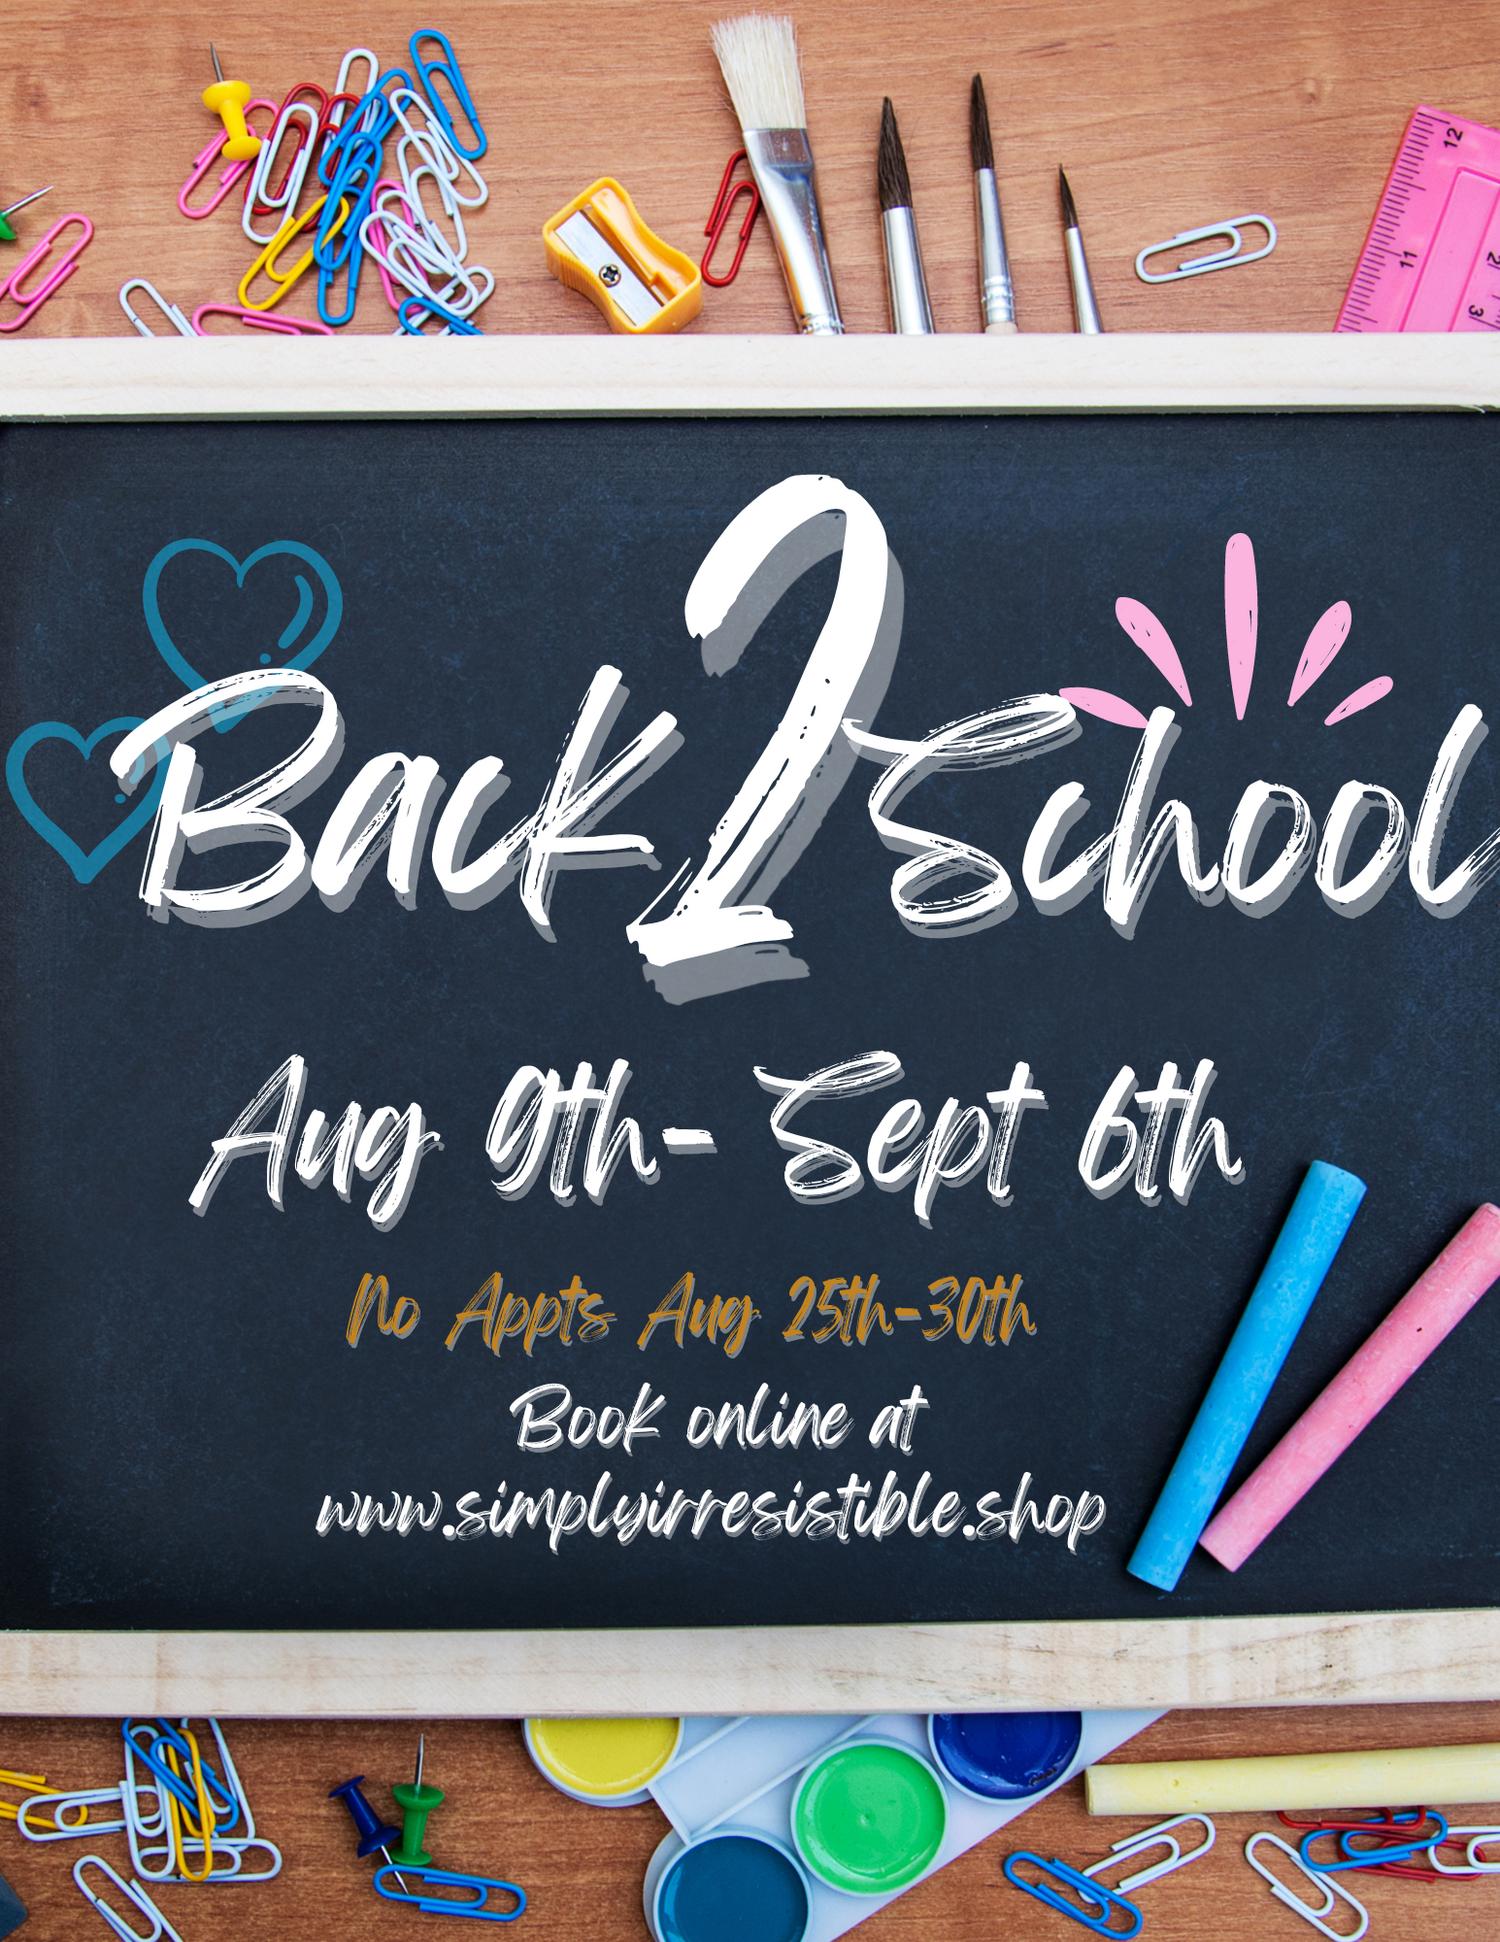 Back-2-School‼️ Aug 9th-Sept 6th